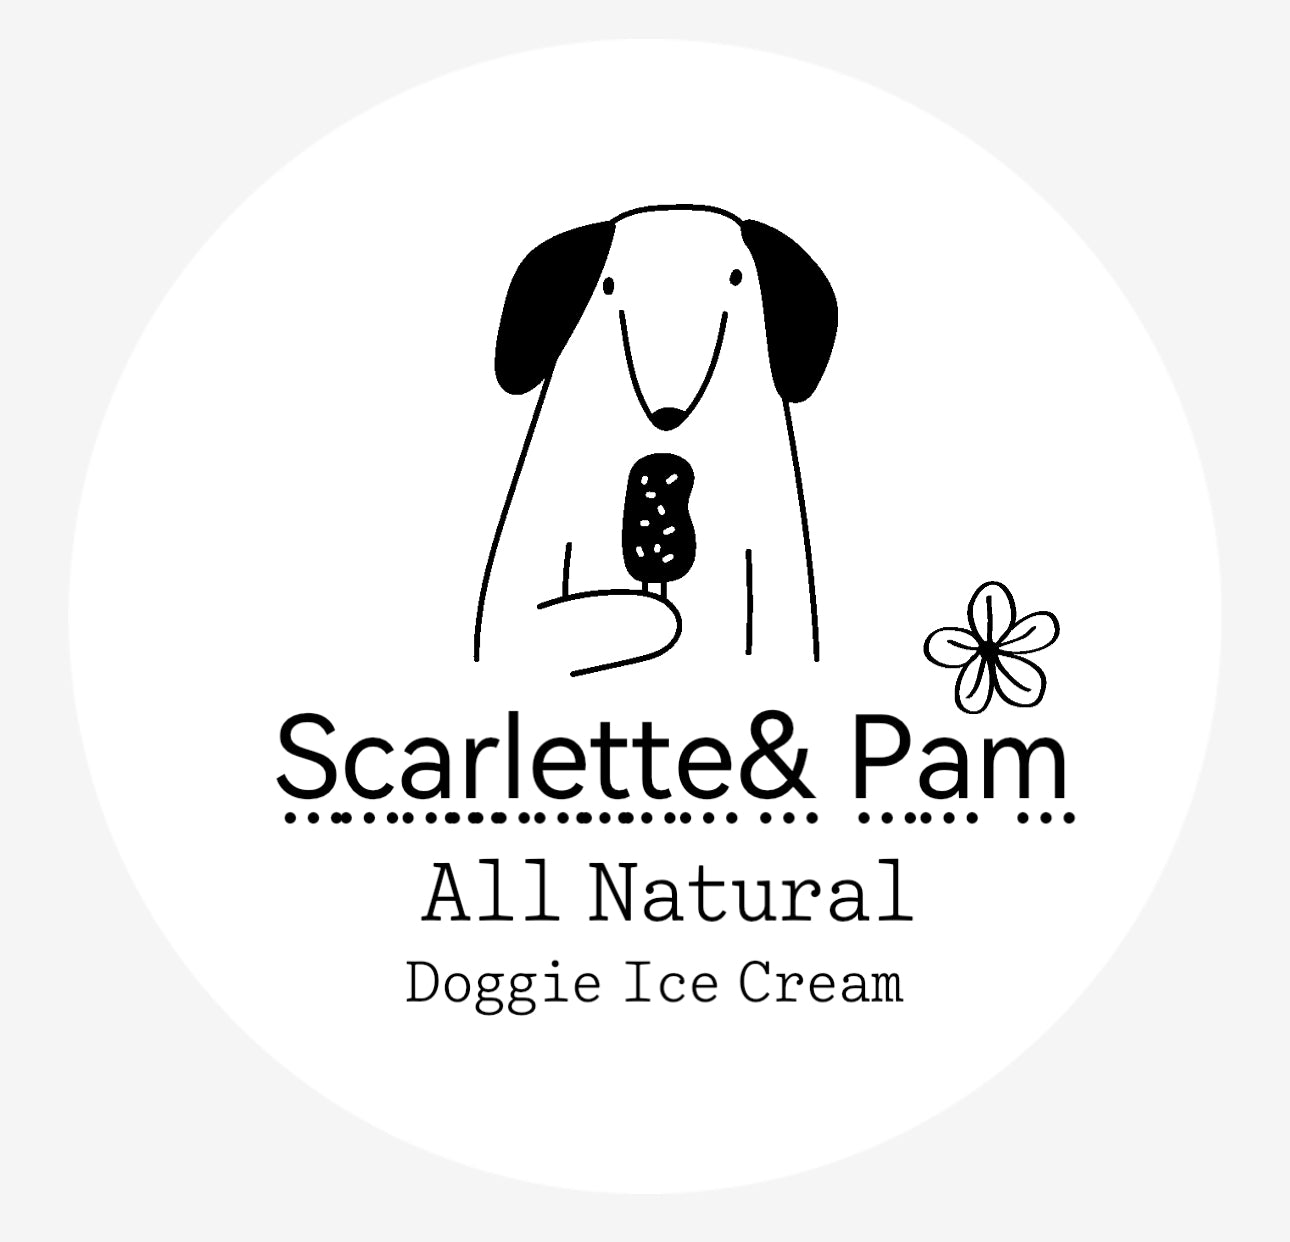 Scarlette & Pam Doggie Ice Cream 狗狗羊奶雪糕